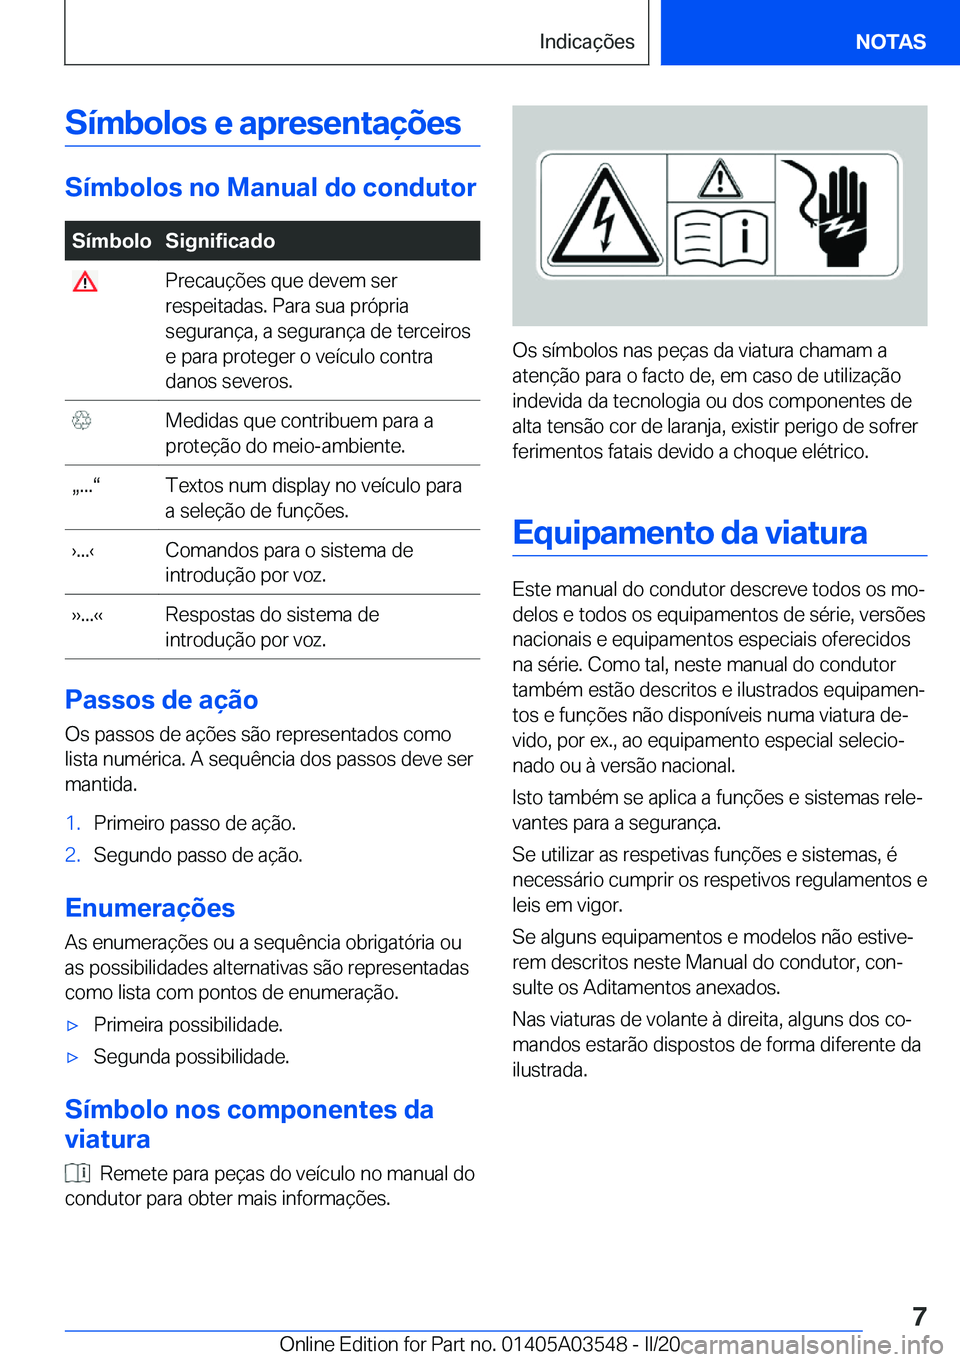 BMW X3 PLUG IN HYBRID 2020  Manual do condutor (in Portuguese) �S�